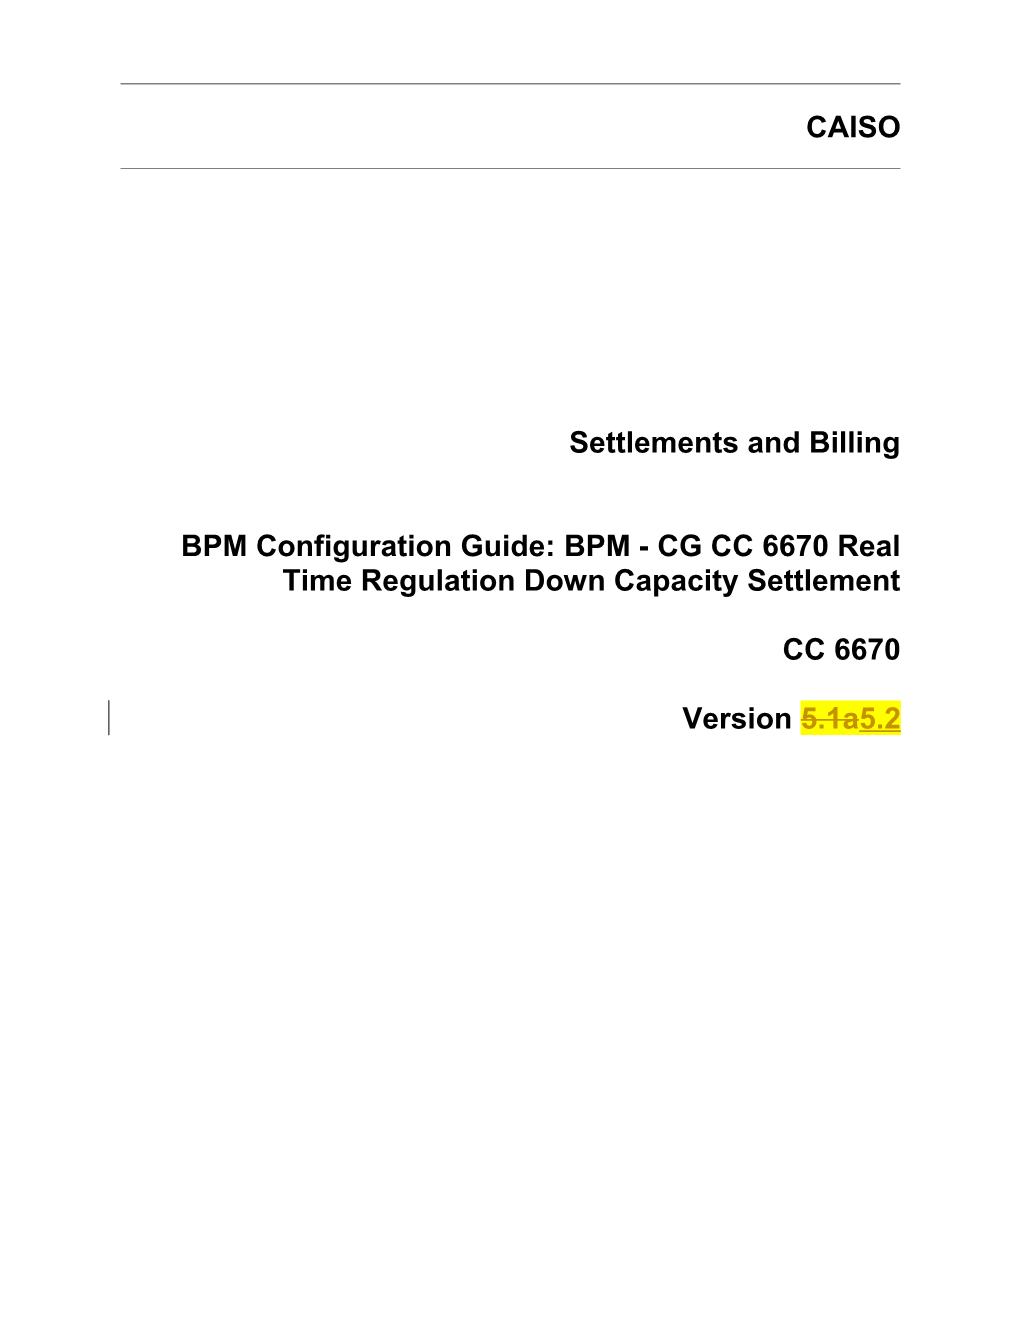 BPM - CG CC 6670 Real Time Regulation Down Capacity Settlement